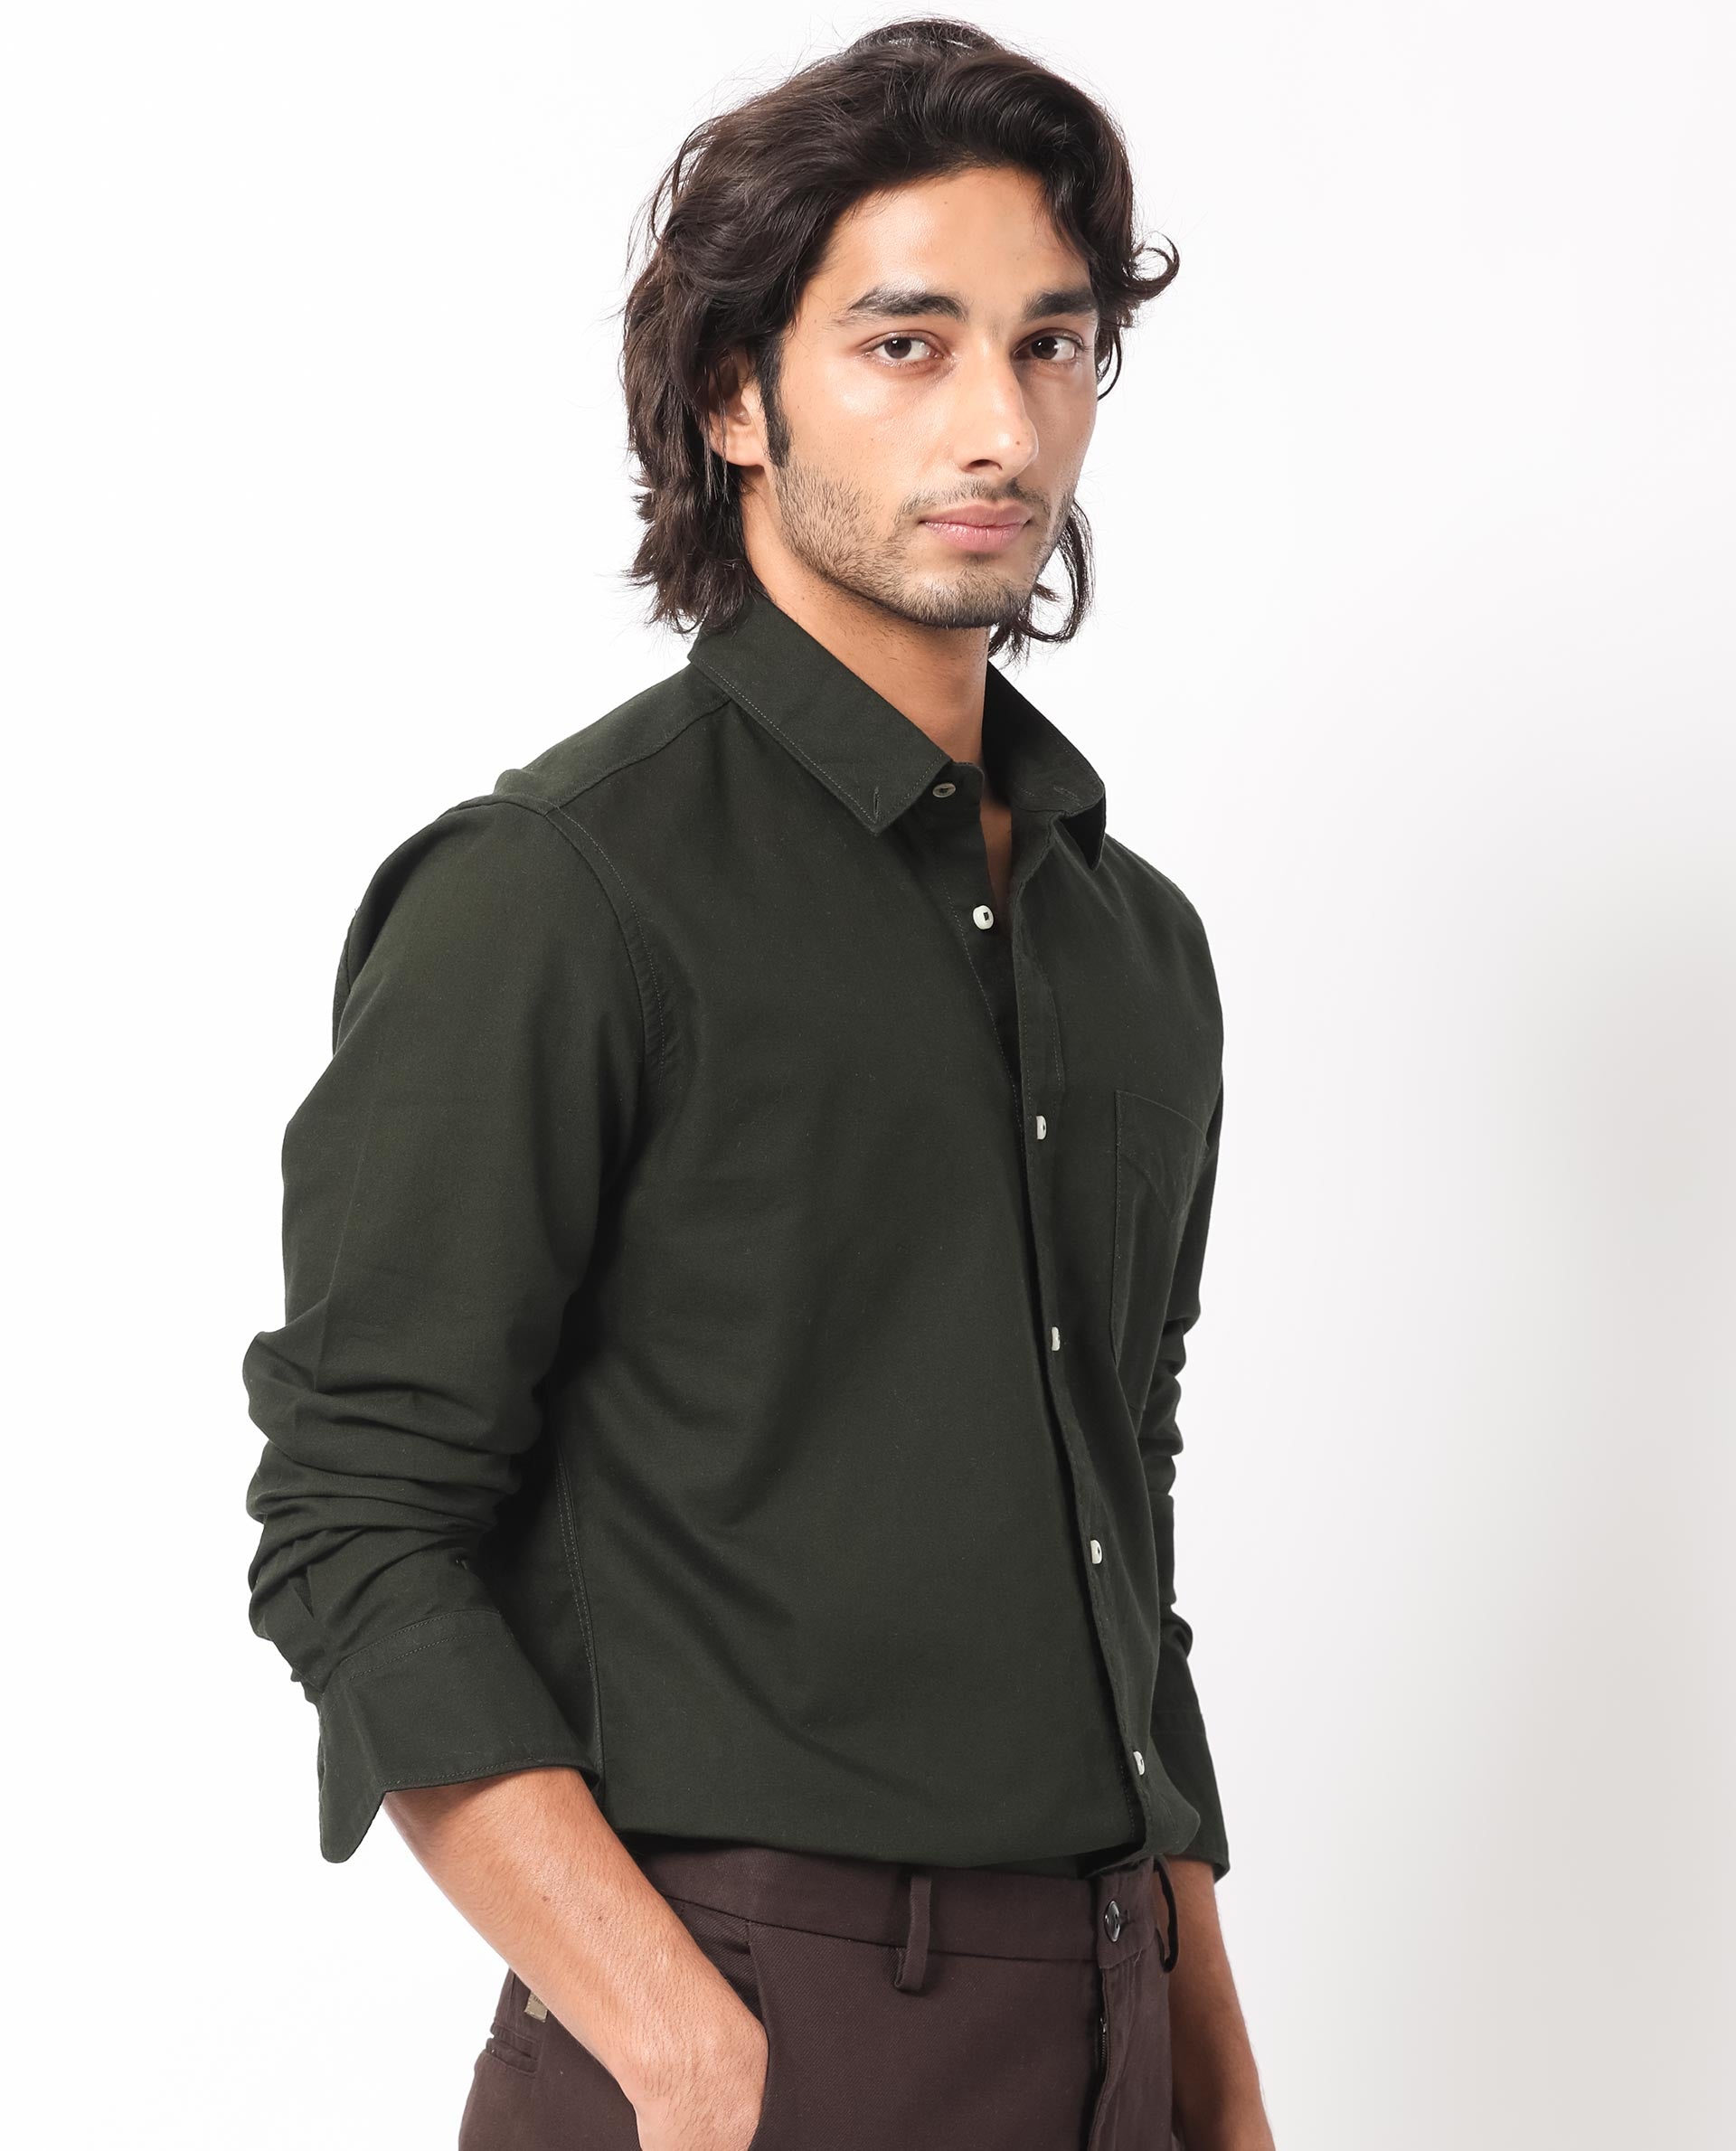 Mens Pure Linen Striped Full Sleeves Pista Green Shirt LS10